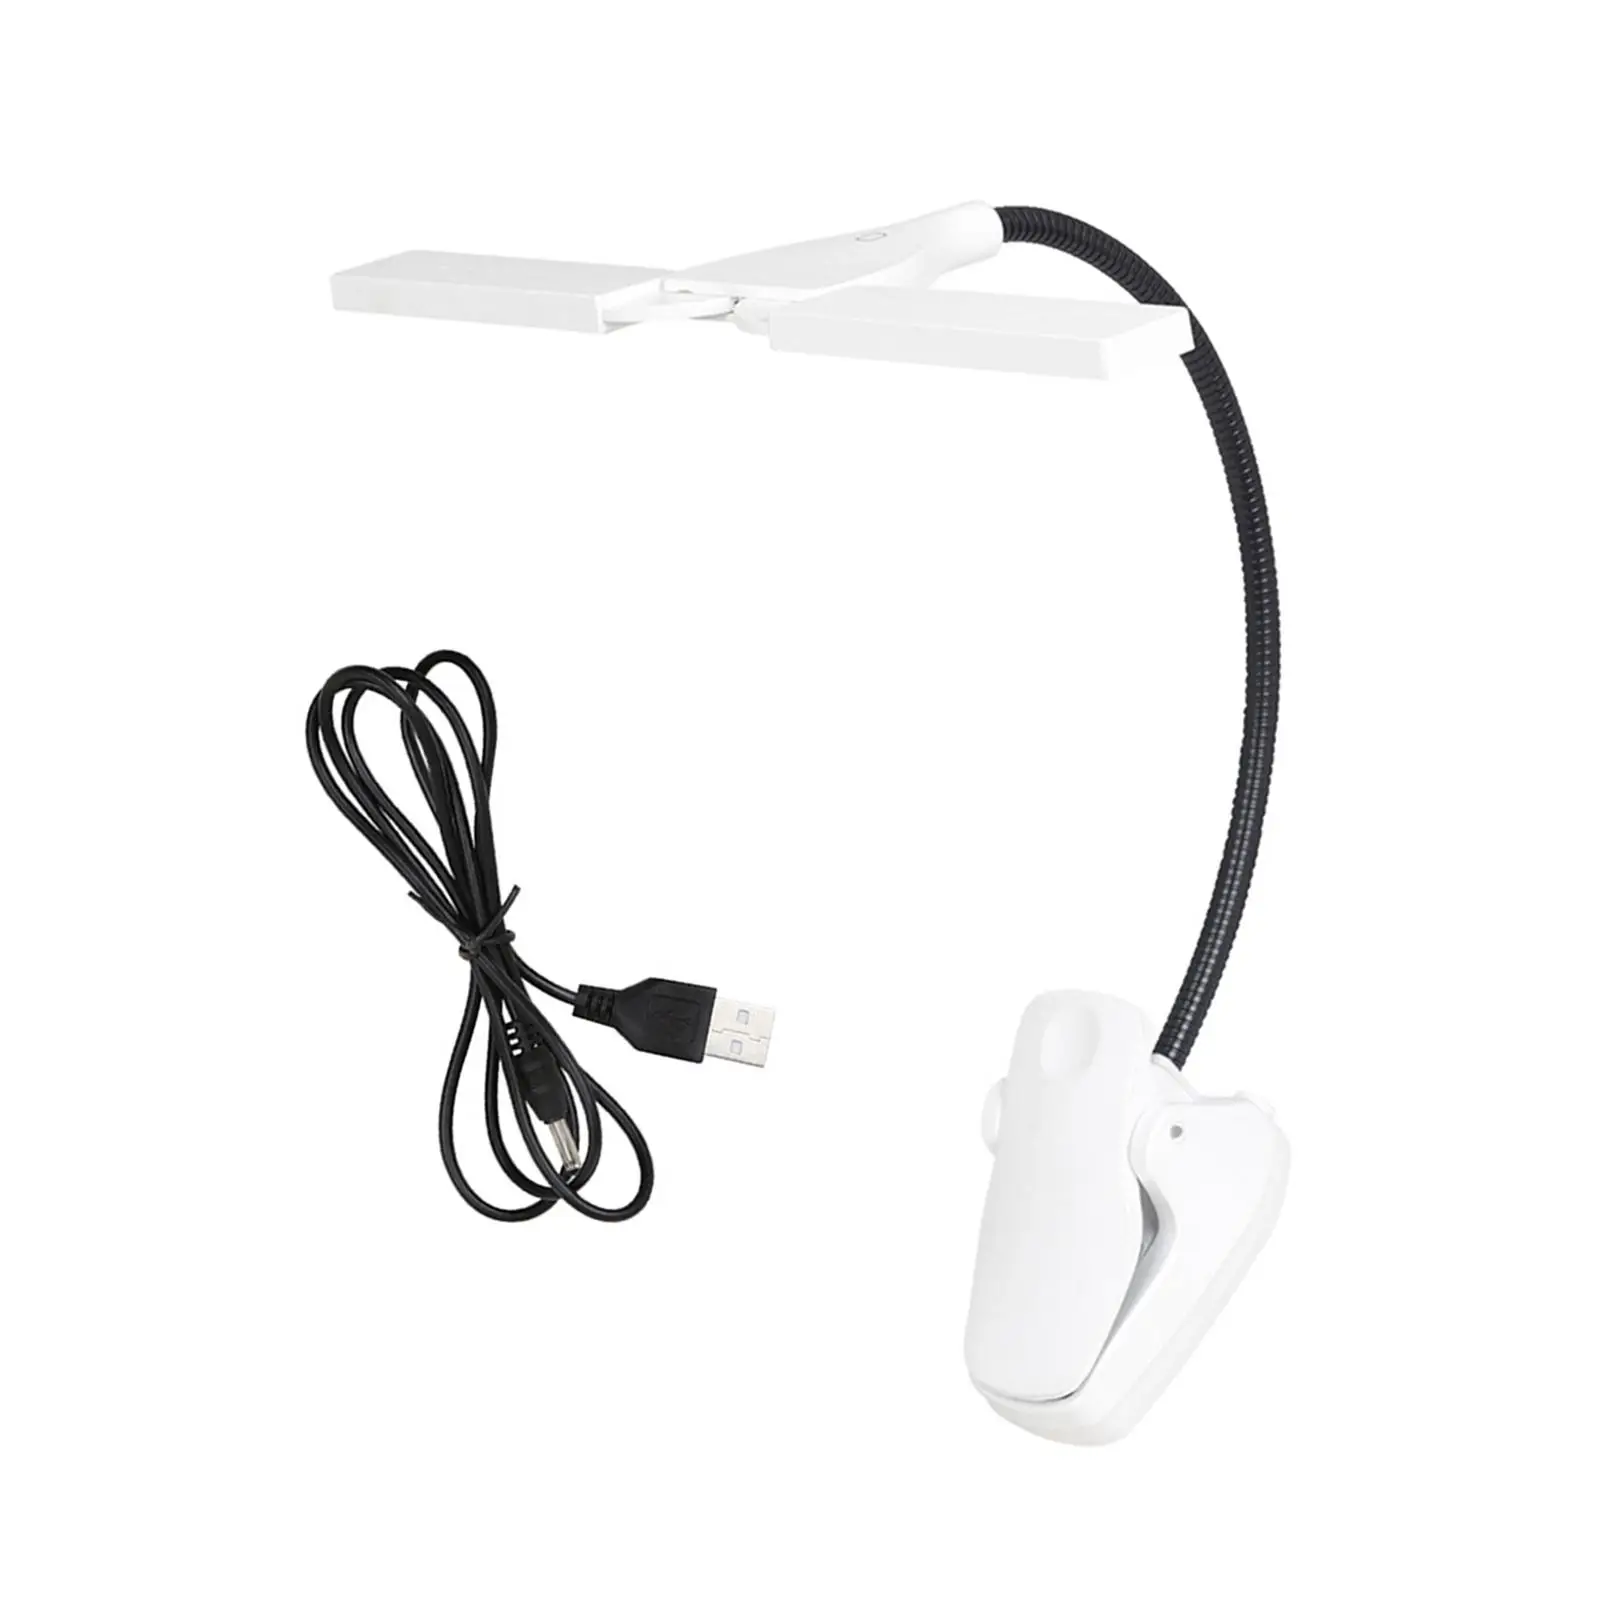 Clip On Light Reading Light USB Rechargeable LED Desk Lamp for Bedside